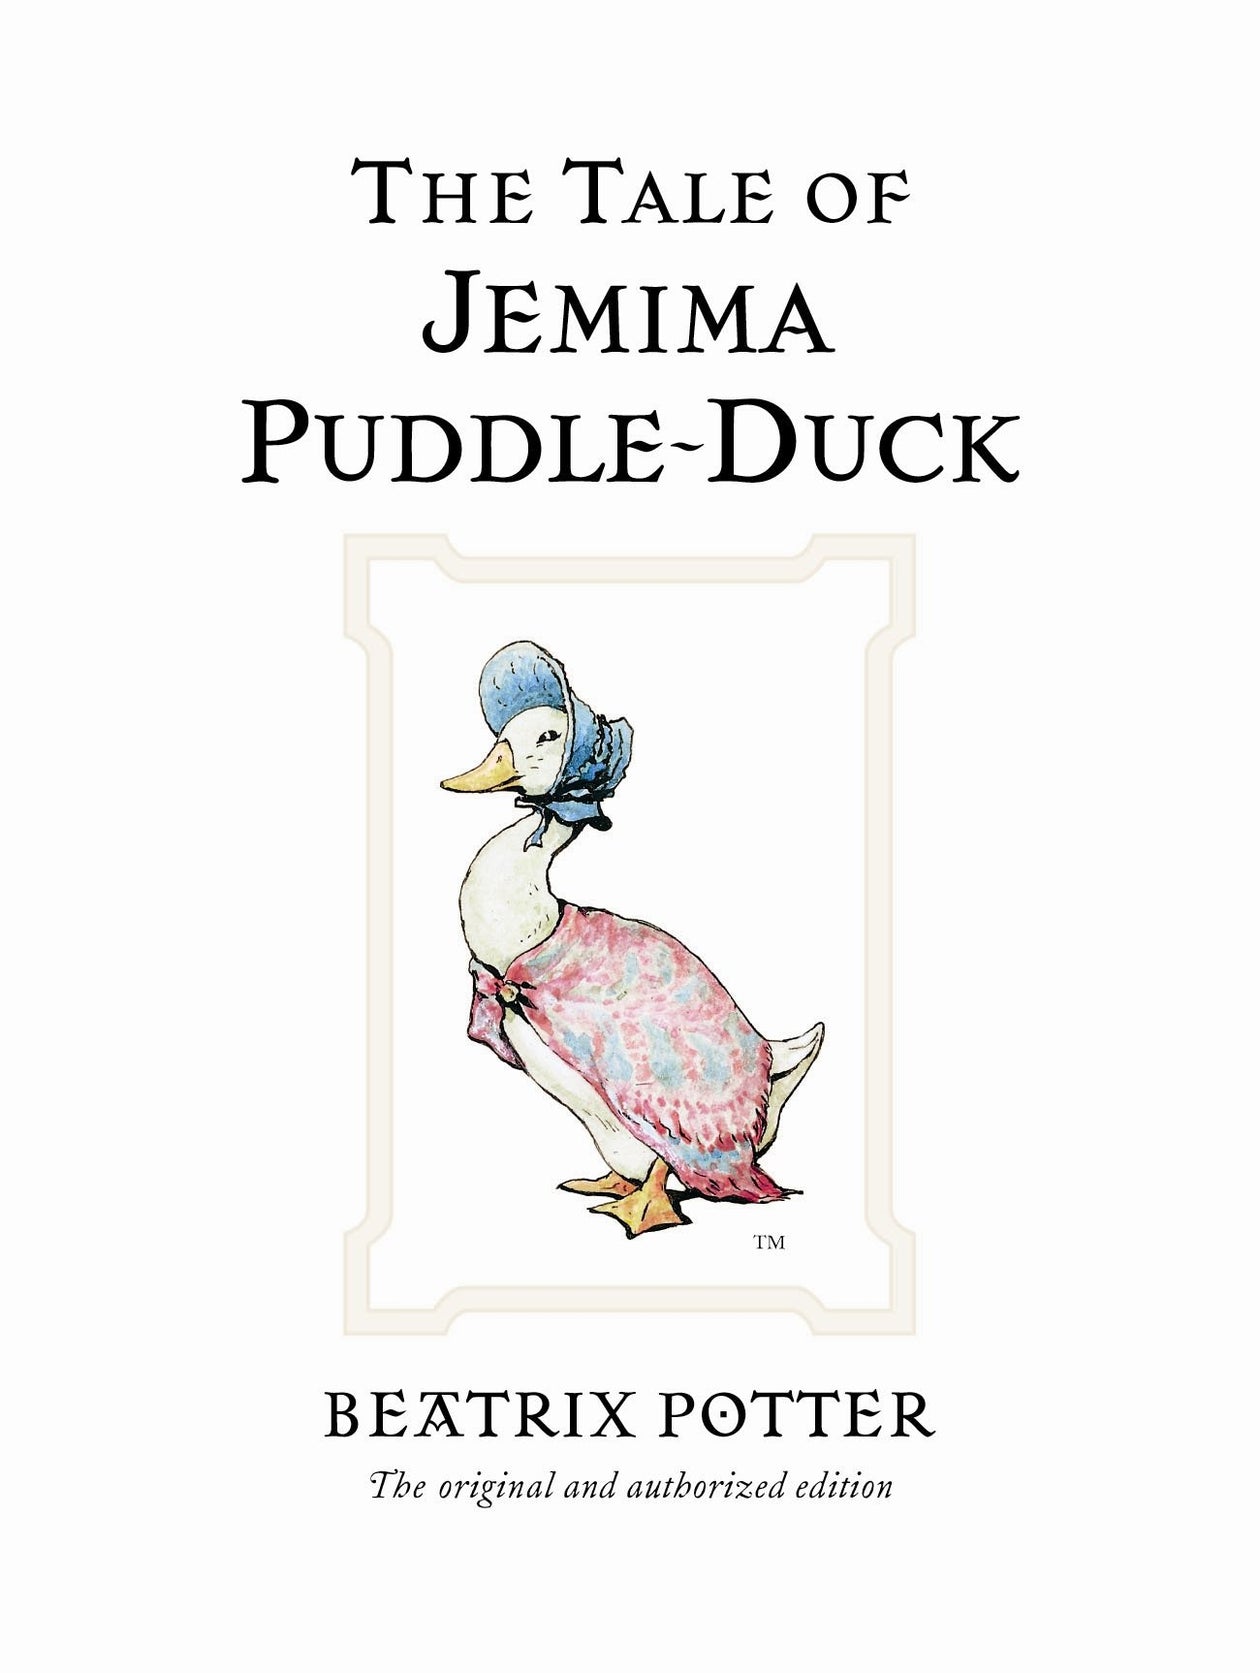 The Tale of Jemima Puddleduck by Beatrix Potter